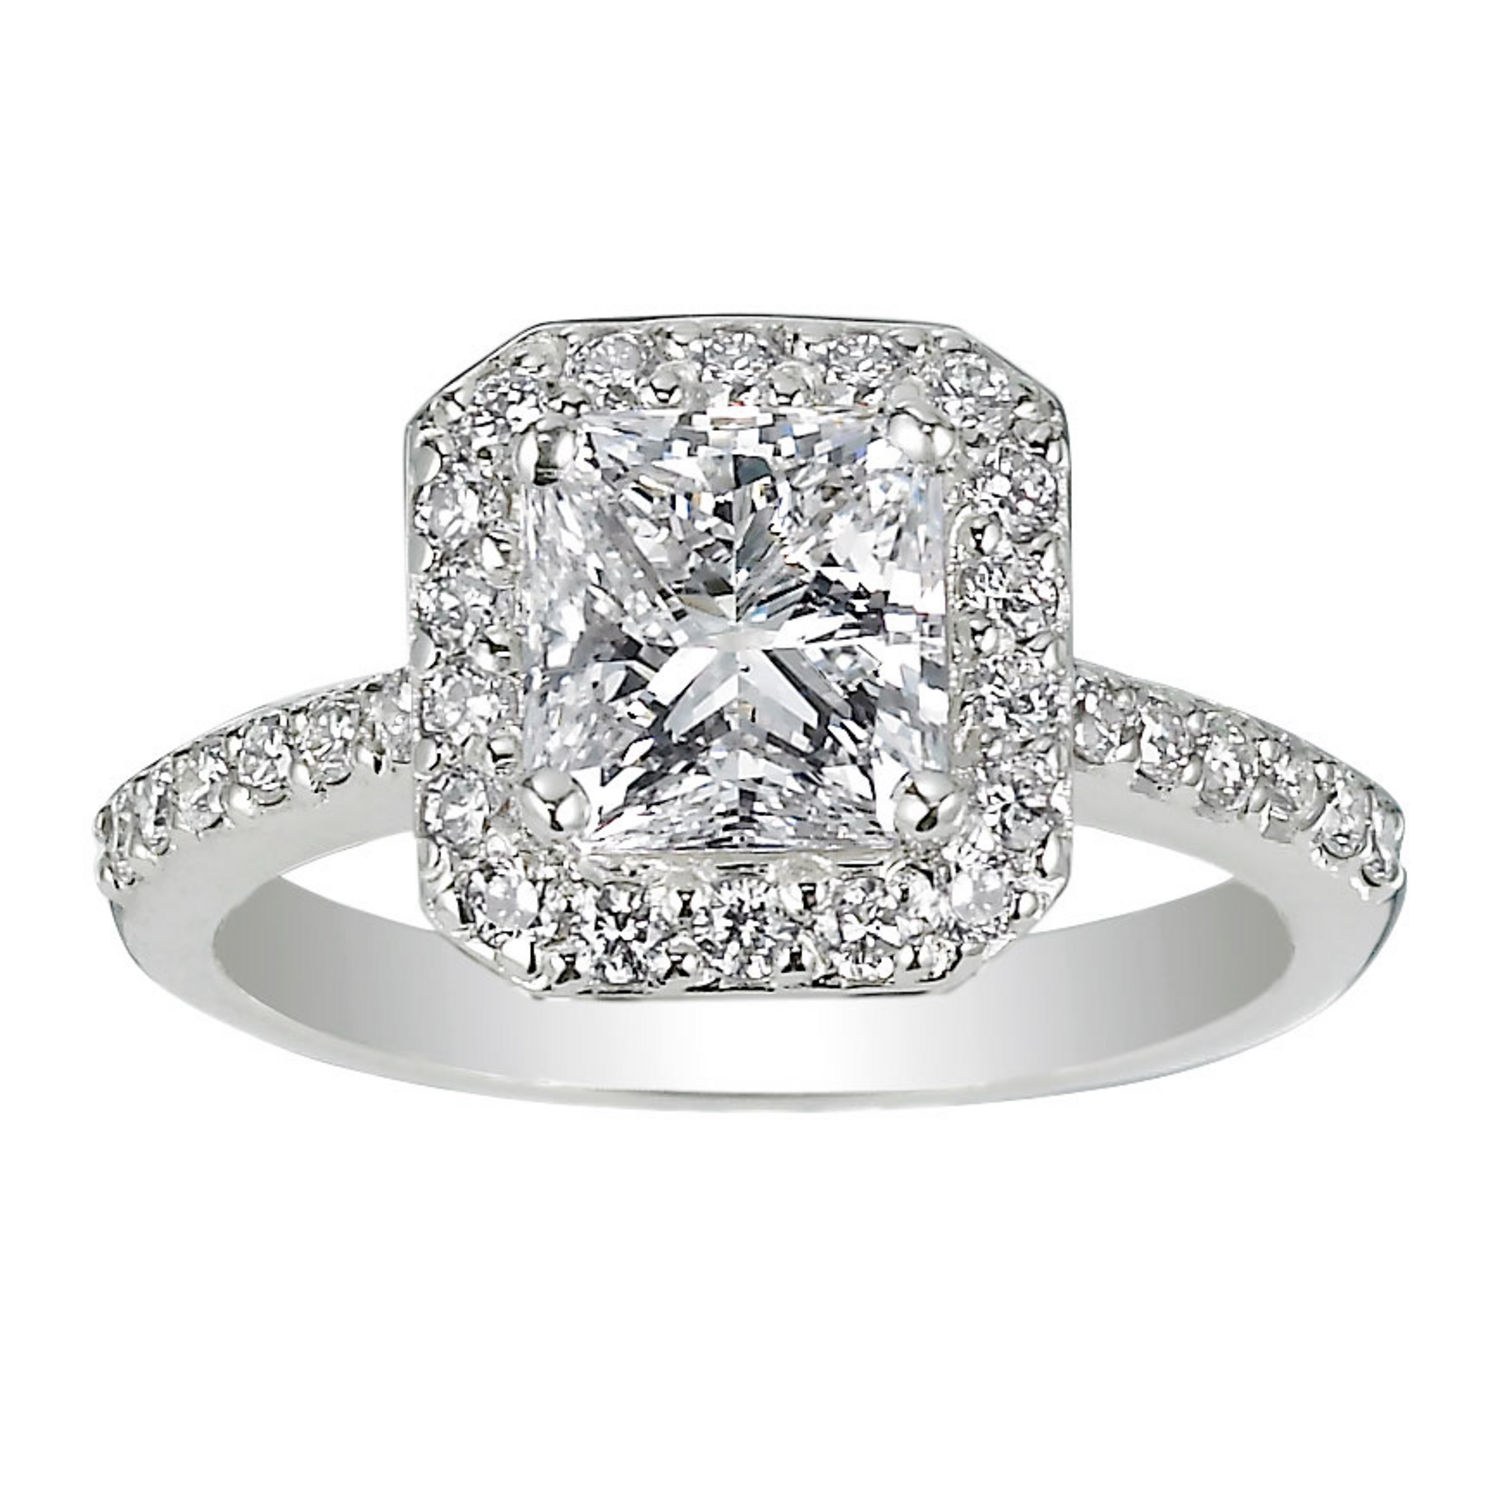 62 diamond engagement rings under $5,000 | glamour PCDWFQM